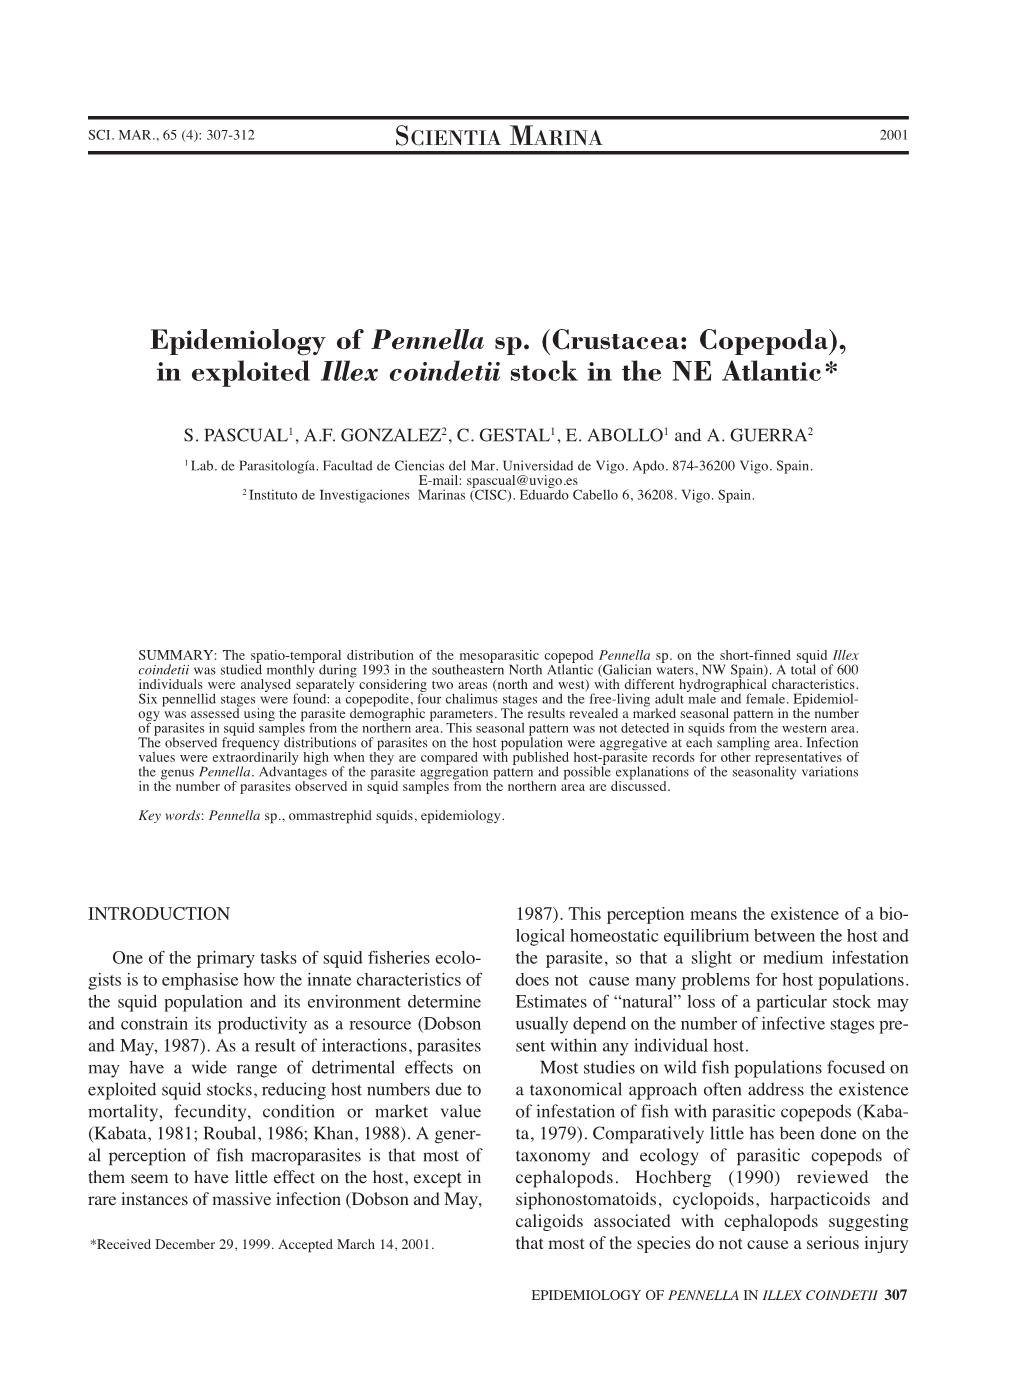 (Crustacea: Copepoda), in Exploited Illex Coindetii Stock in the NE Atlantic*